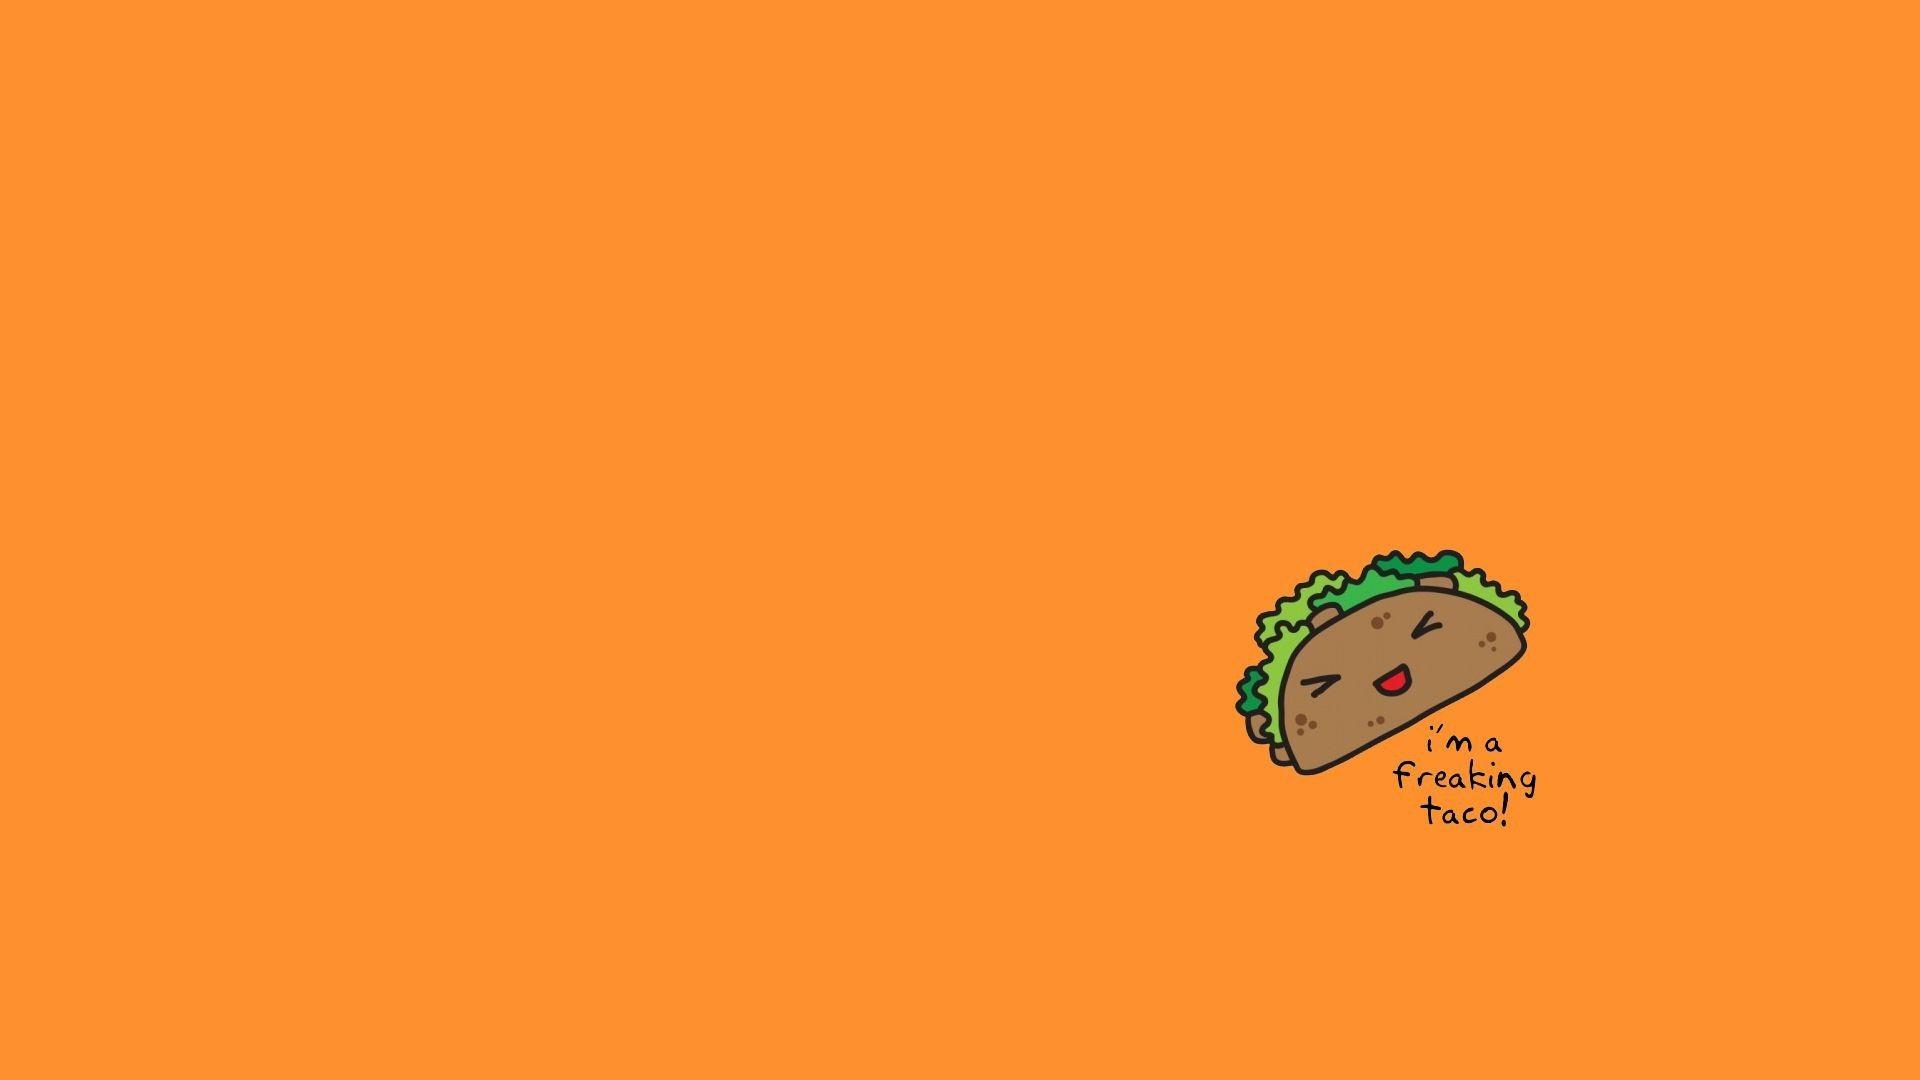 Cute Taco Wallpapers - Top Free Cute